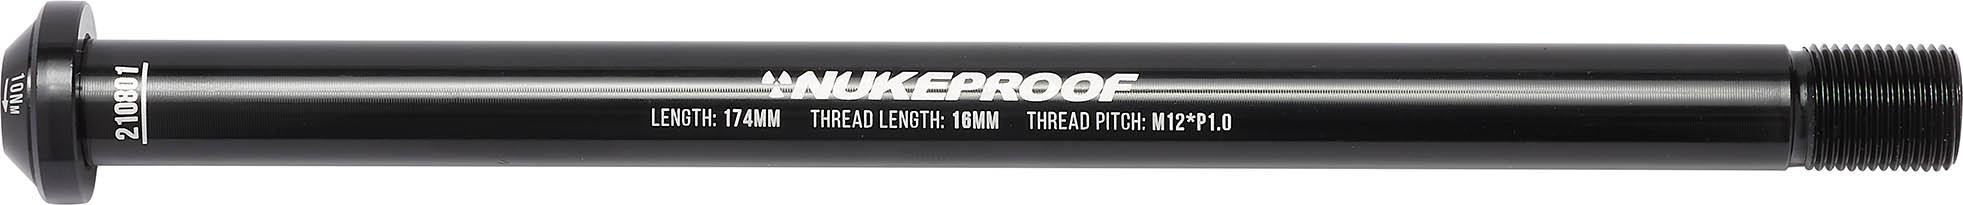 Nukeproof Thru Axle Rear 12mm  Black